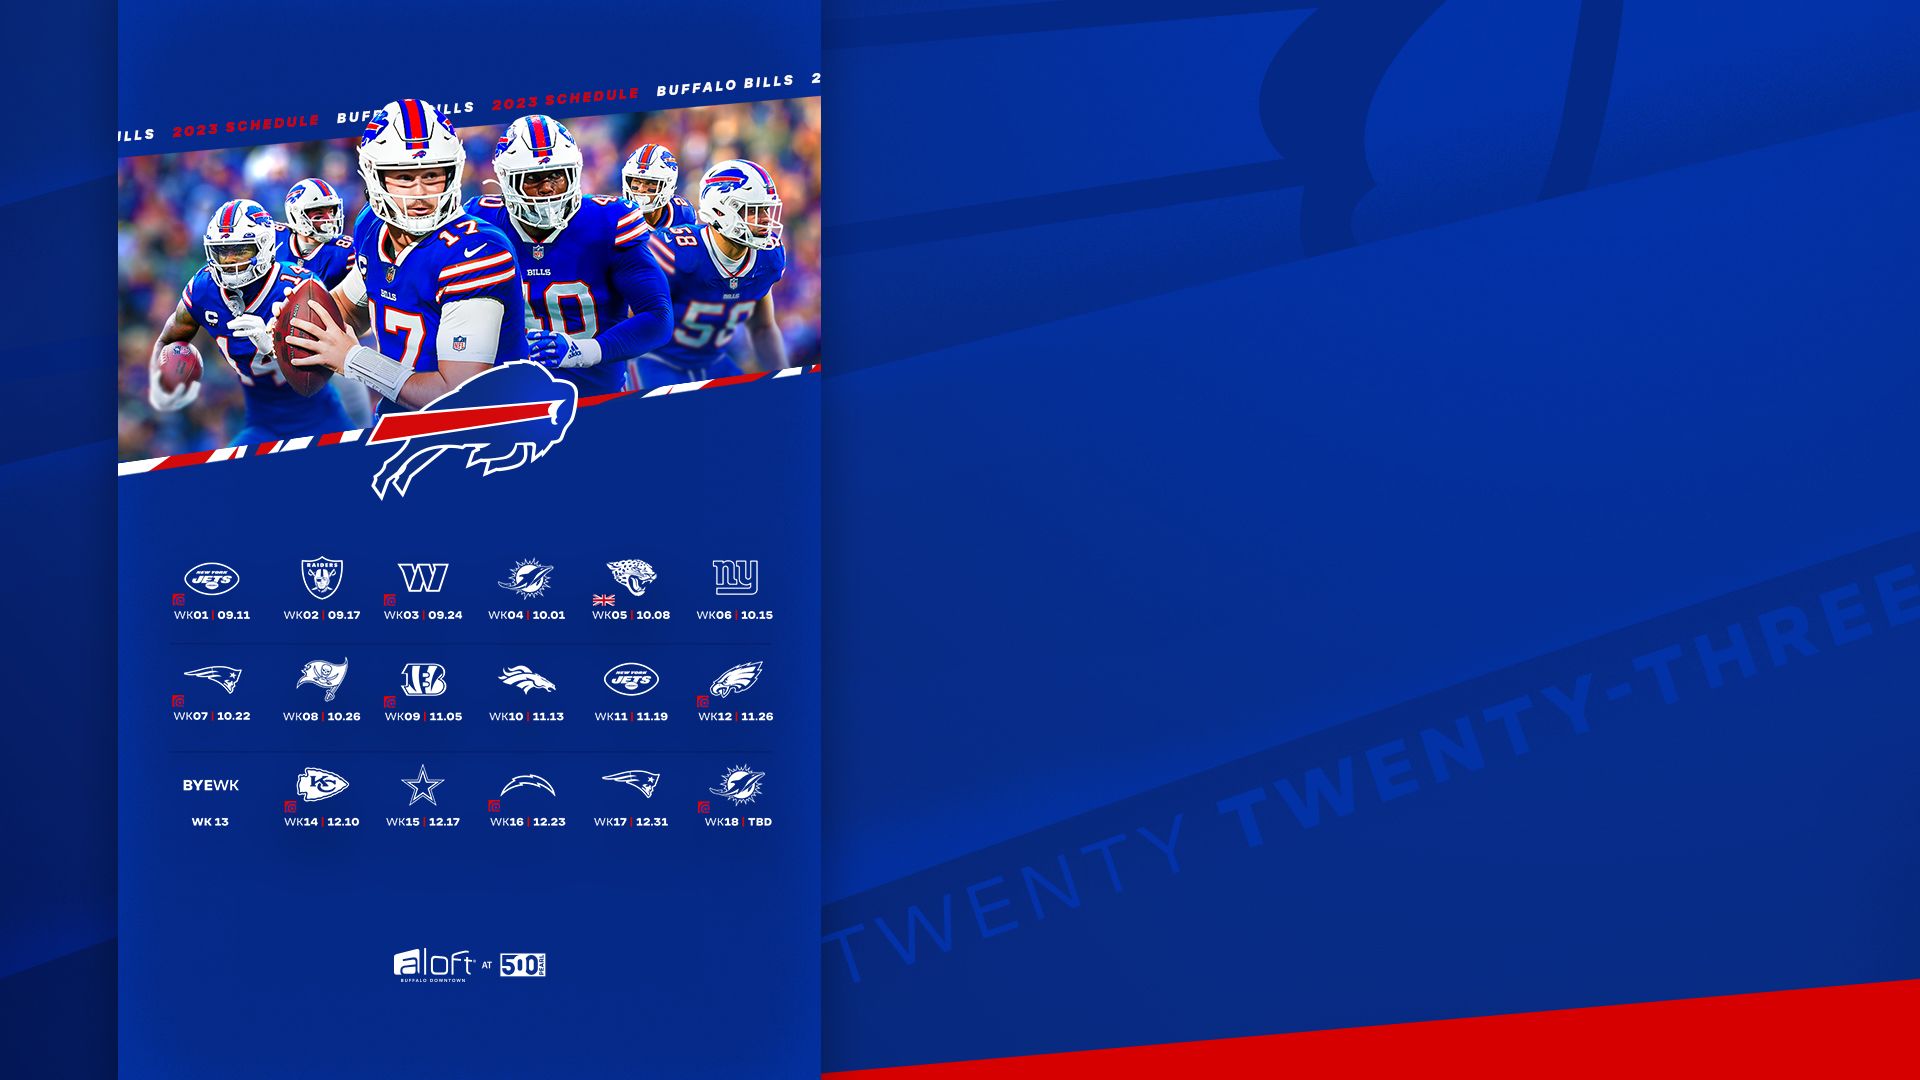 2021 Buffalo Bills schedule: Downloadable wallpaper